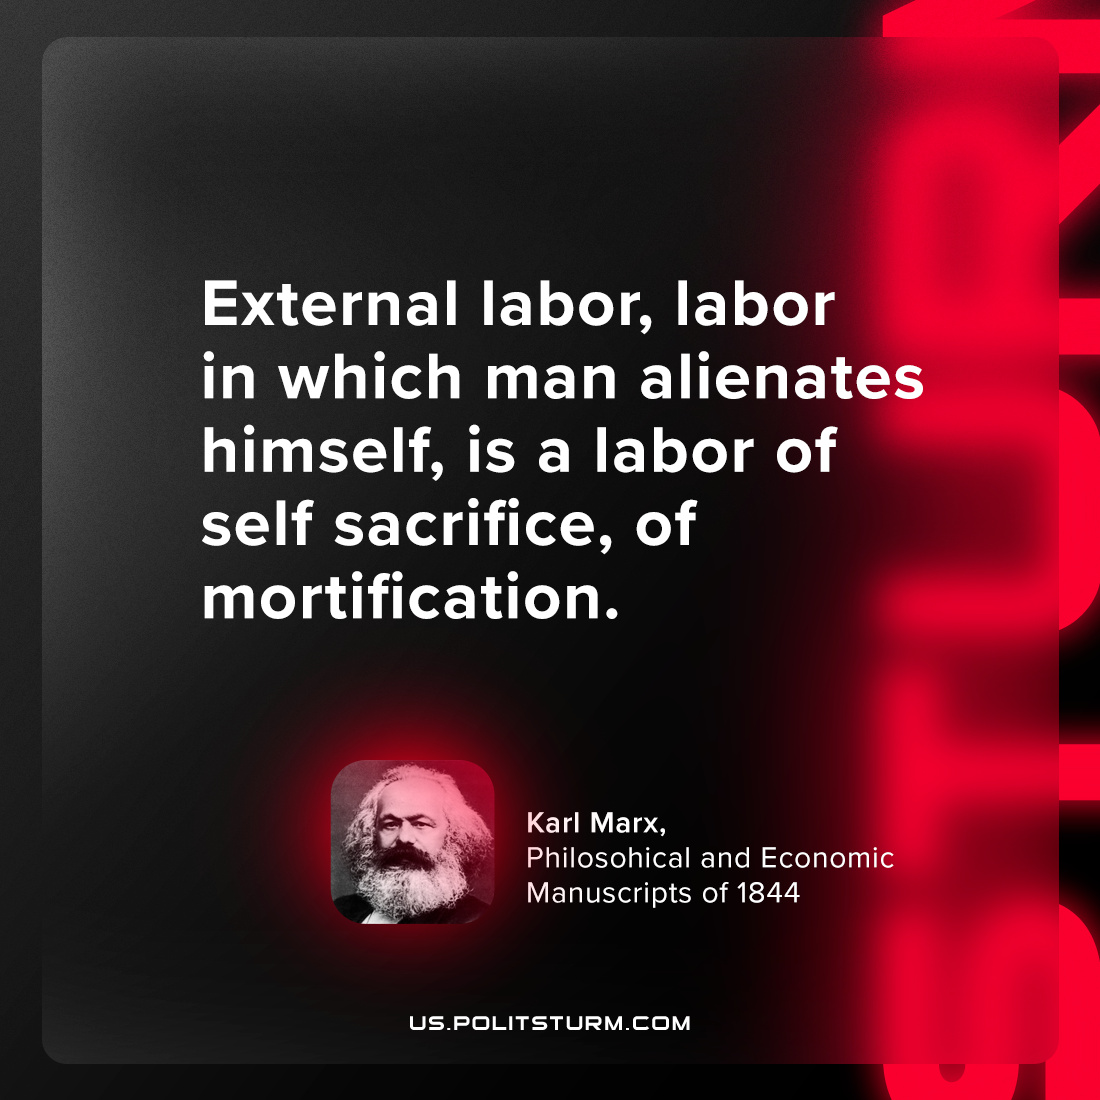 Marx on Alienating Labor